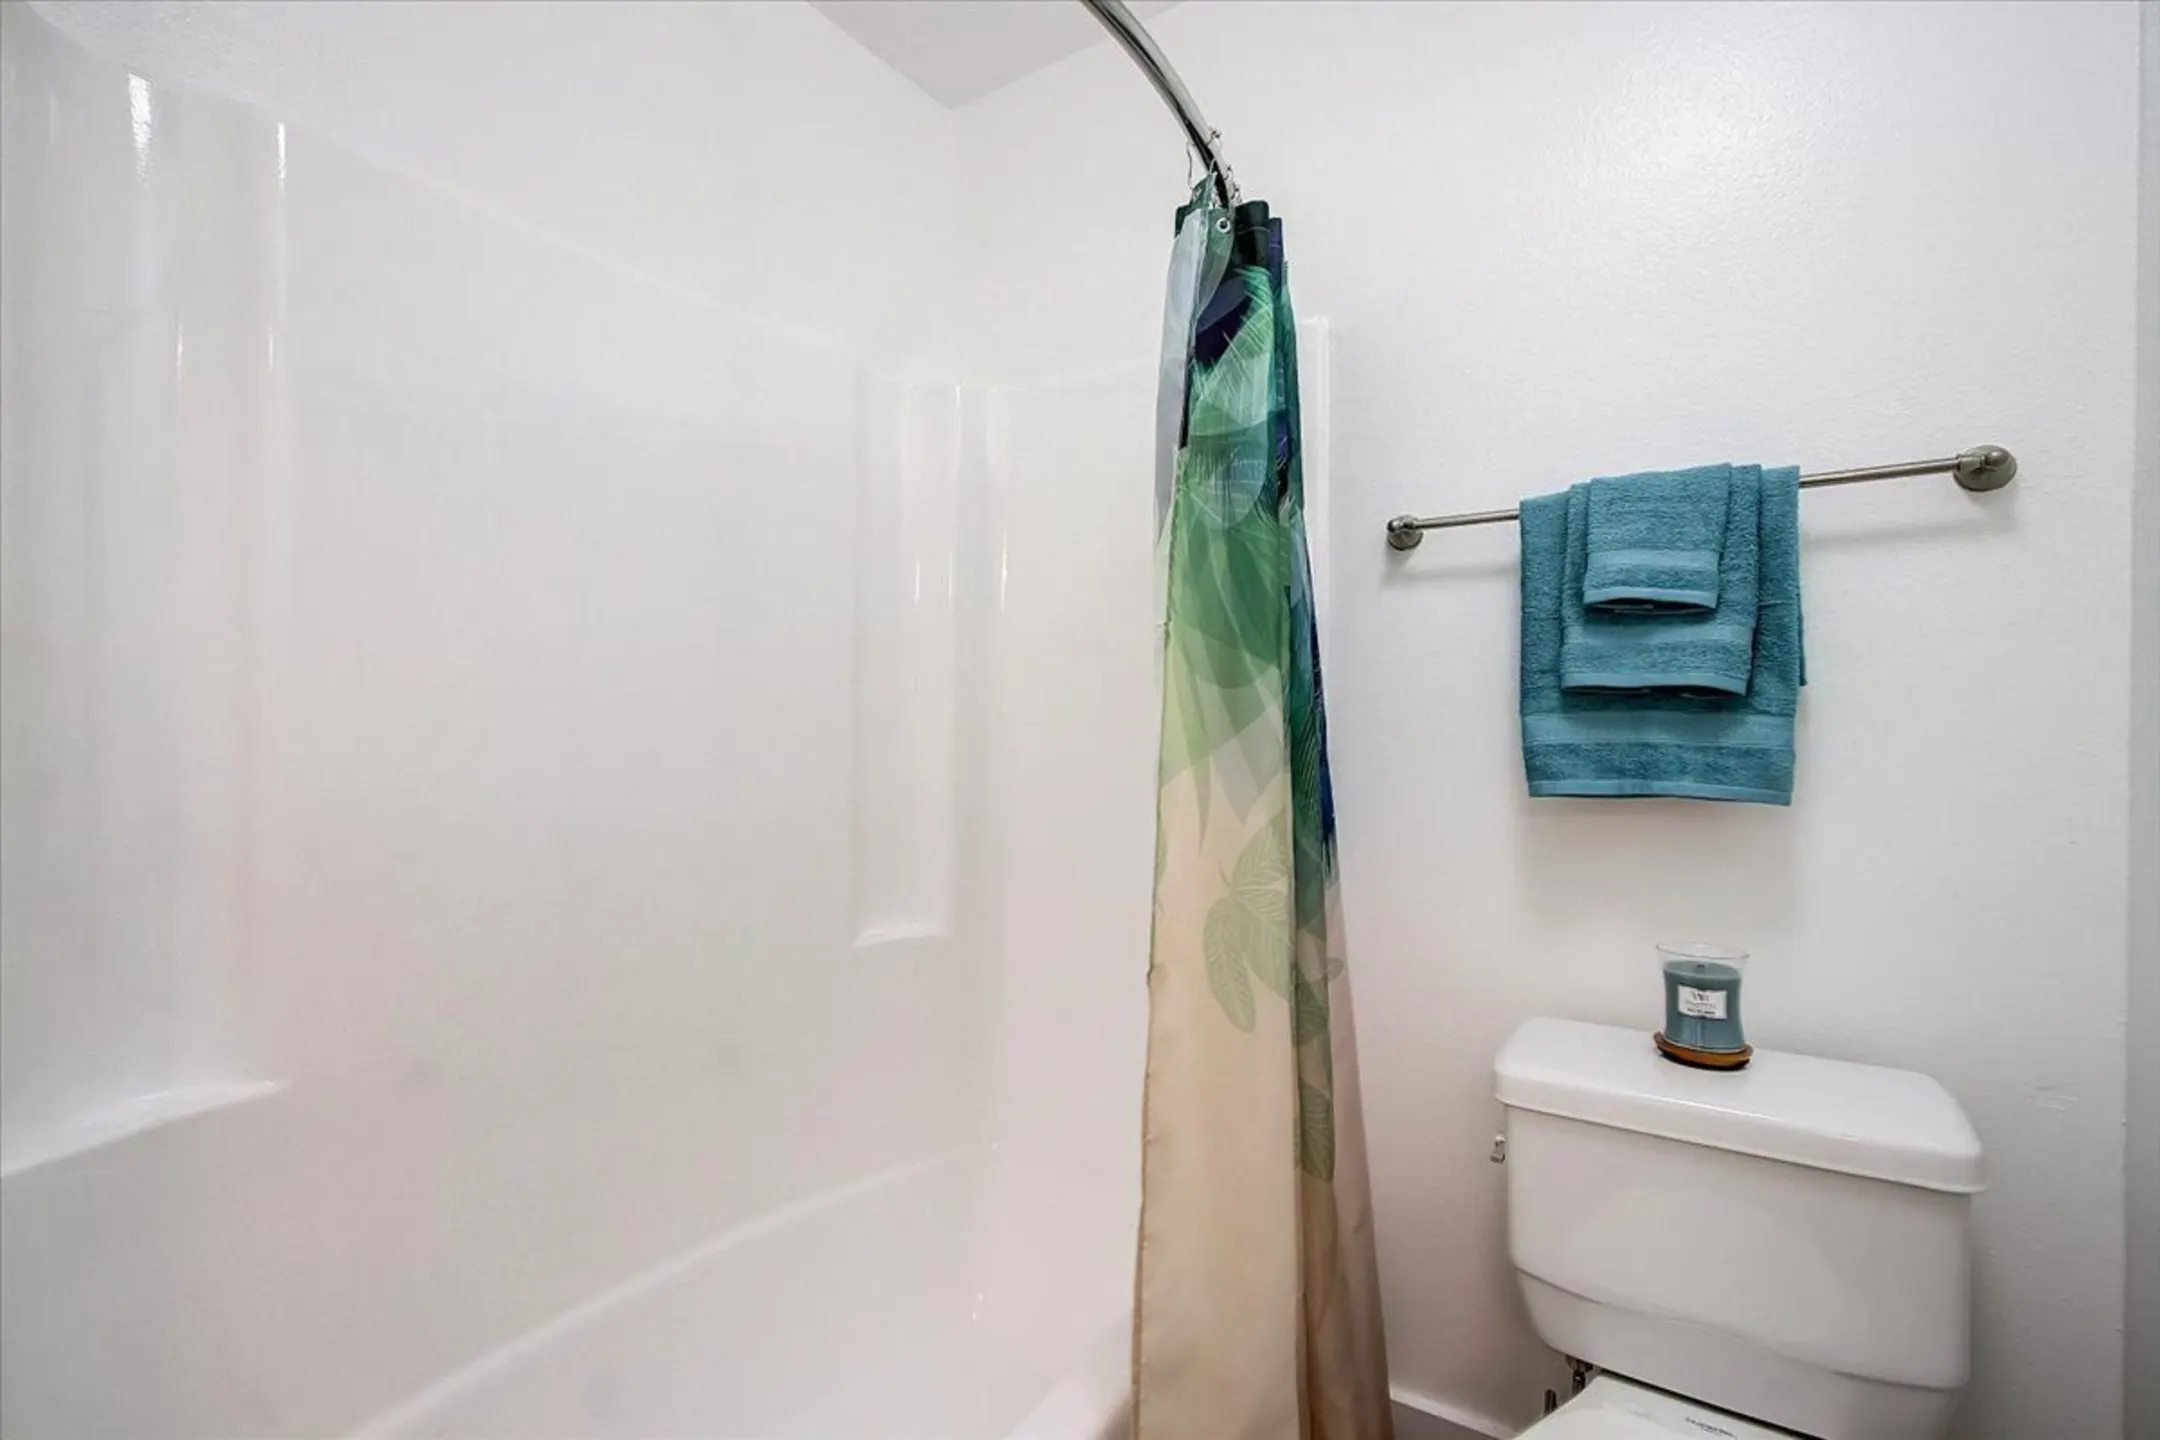 Bathroom - El Cordova Apartments - Carson, CA